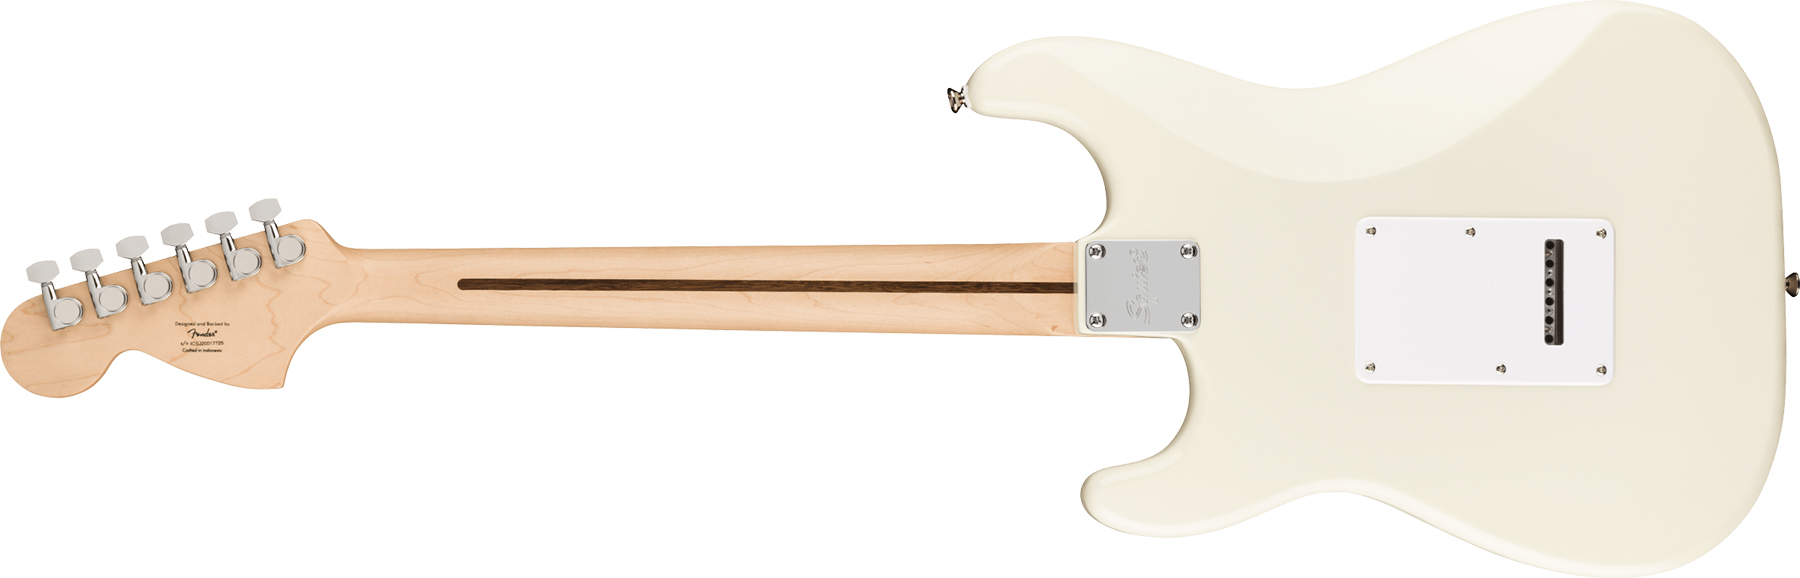 Squier Strat Affinity 2021 Sss Trem Mn - Olympic White - Str shape electric guitar - Variation 1